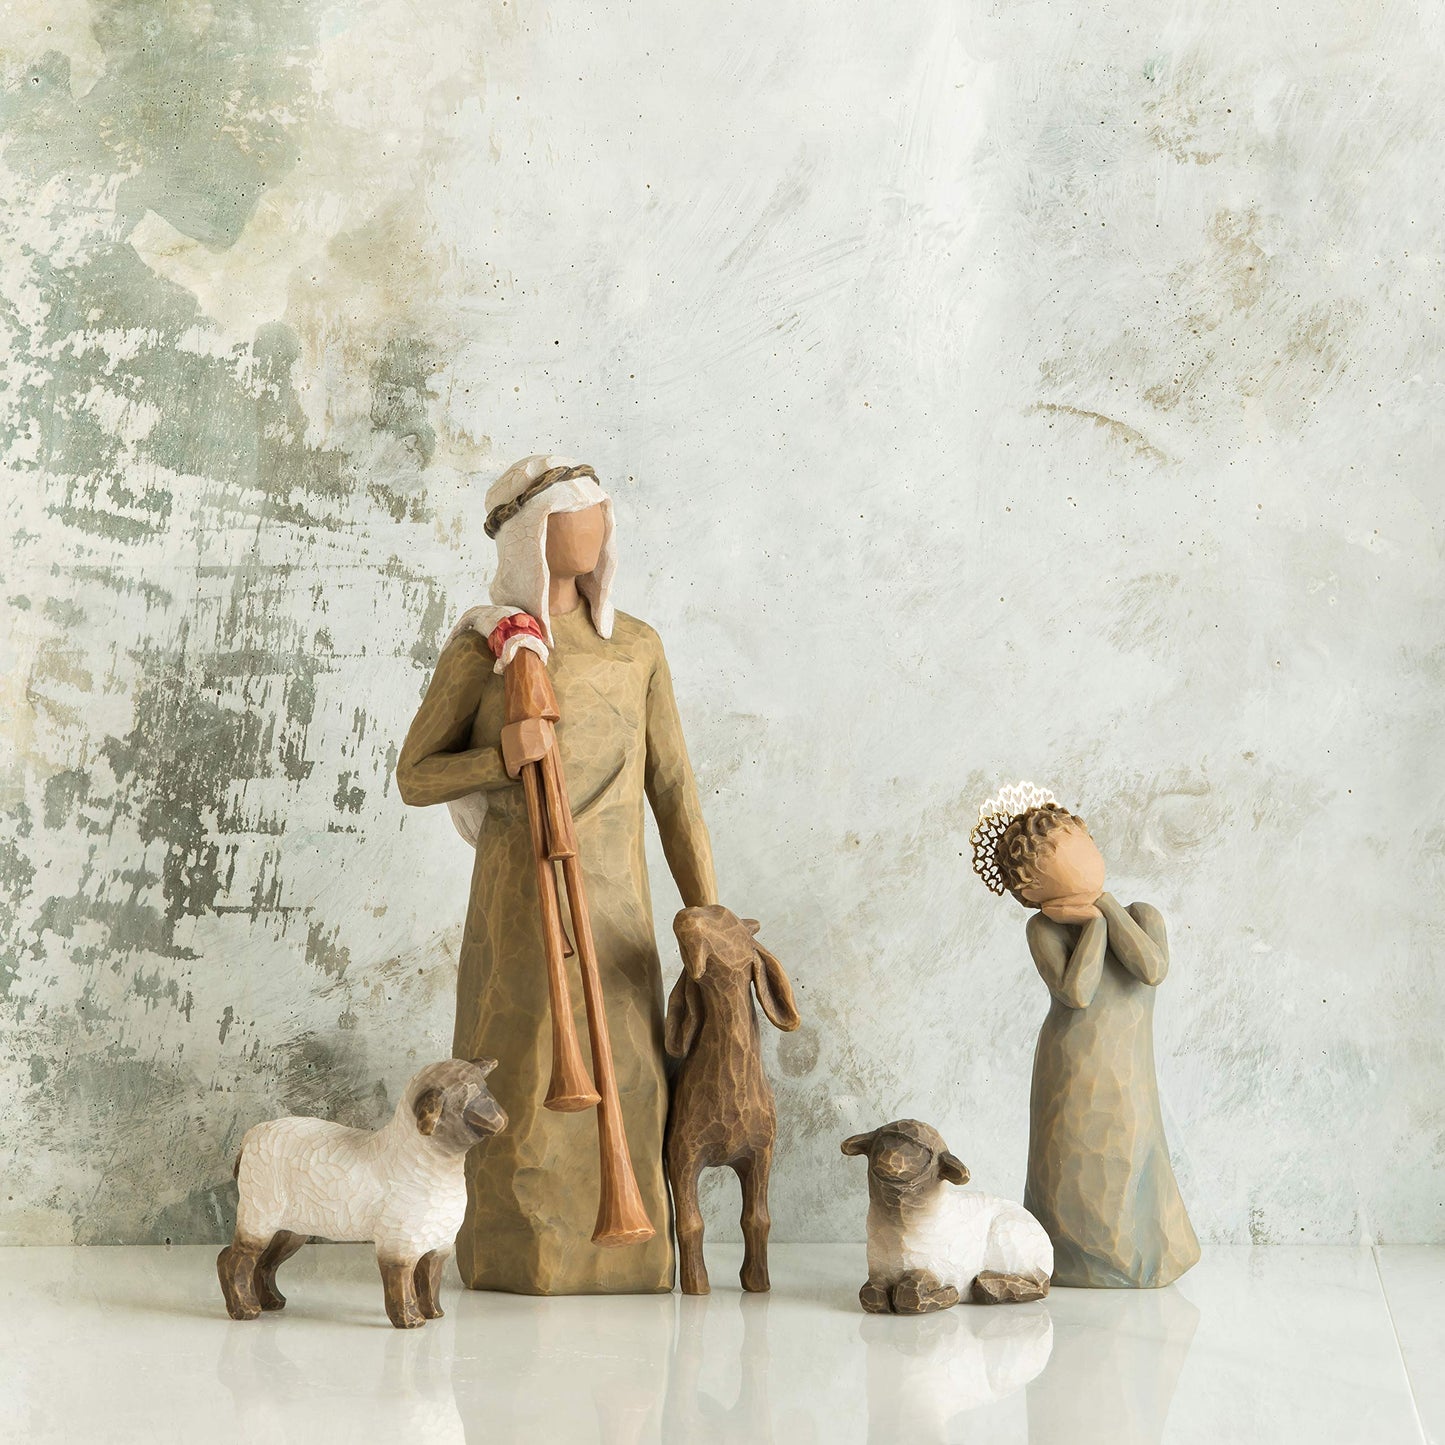 Willow Tree Little Shepherdess, Sculpted Hand-Painted Nativity Figures, 3-Piece Set - PUF HOUSE